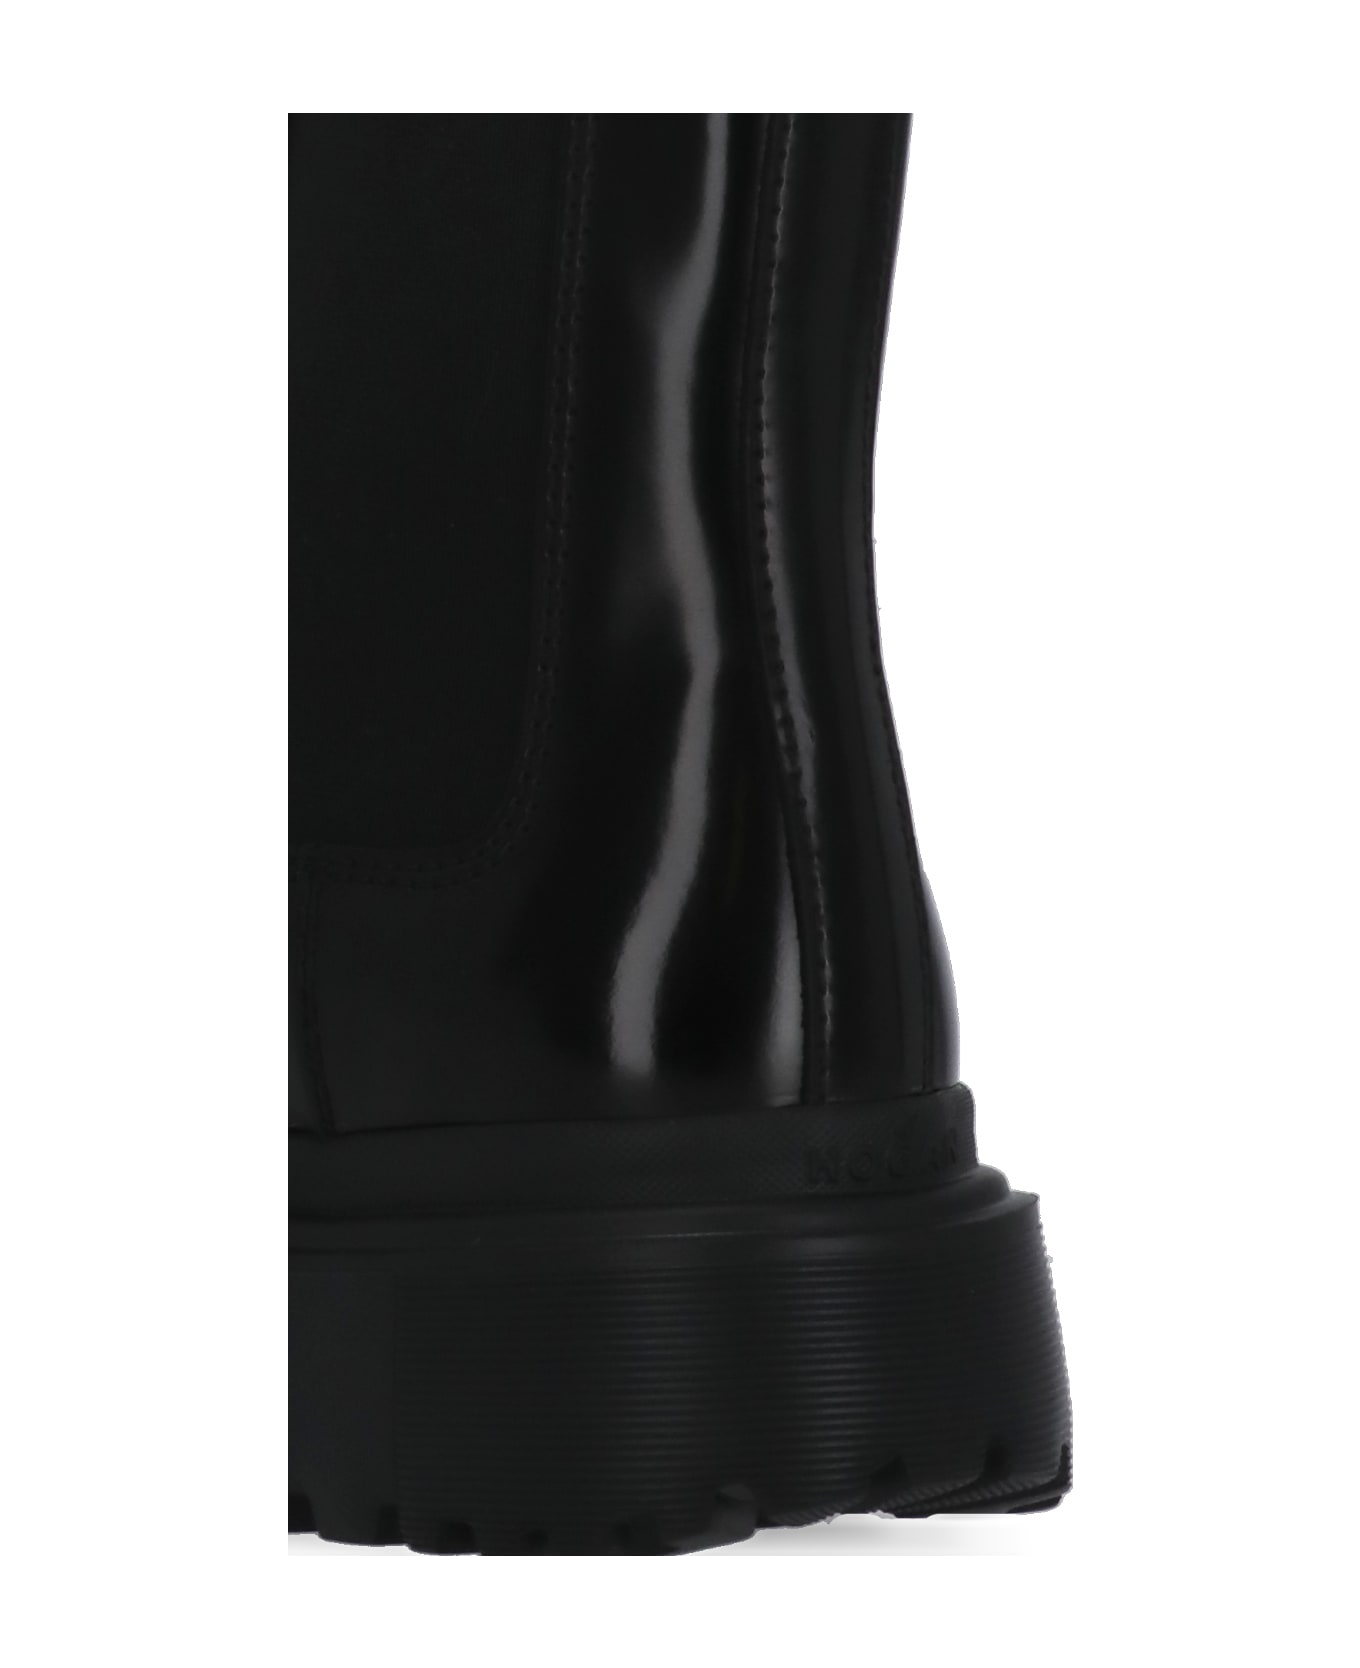 Hogan H629 Chelsea Boots - black